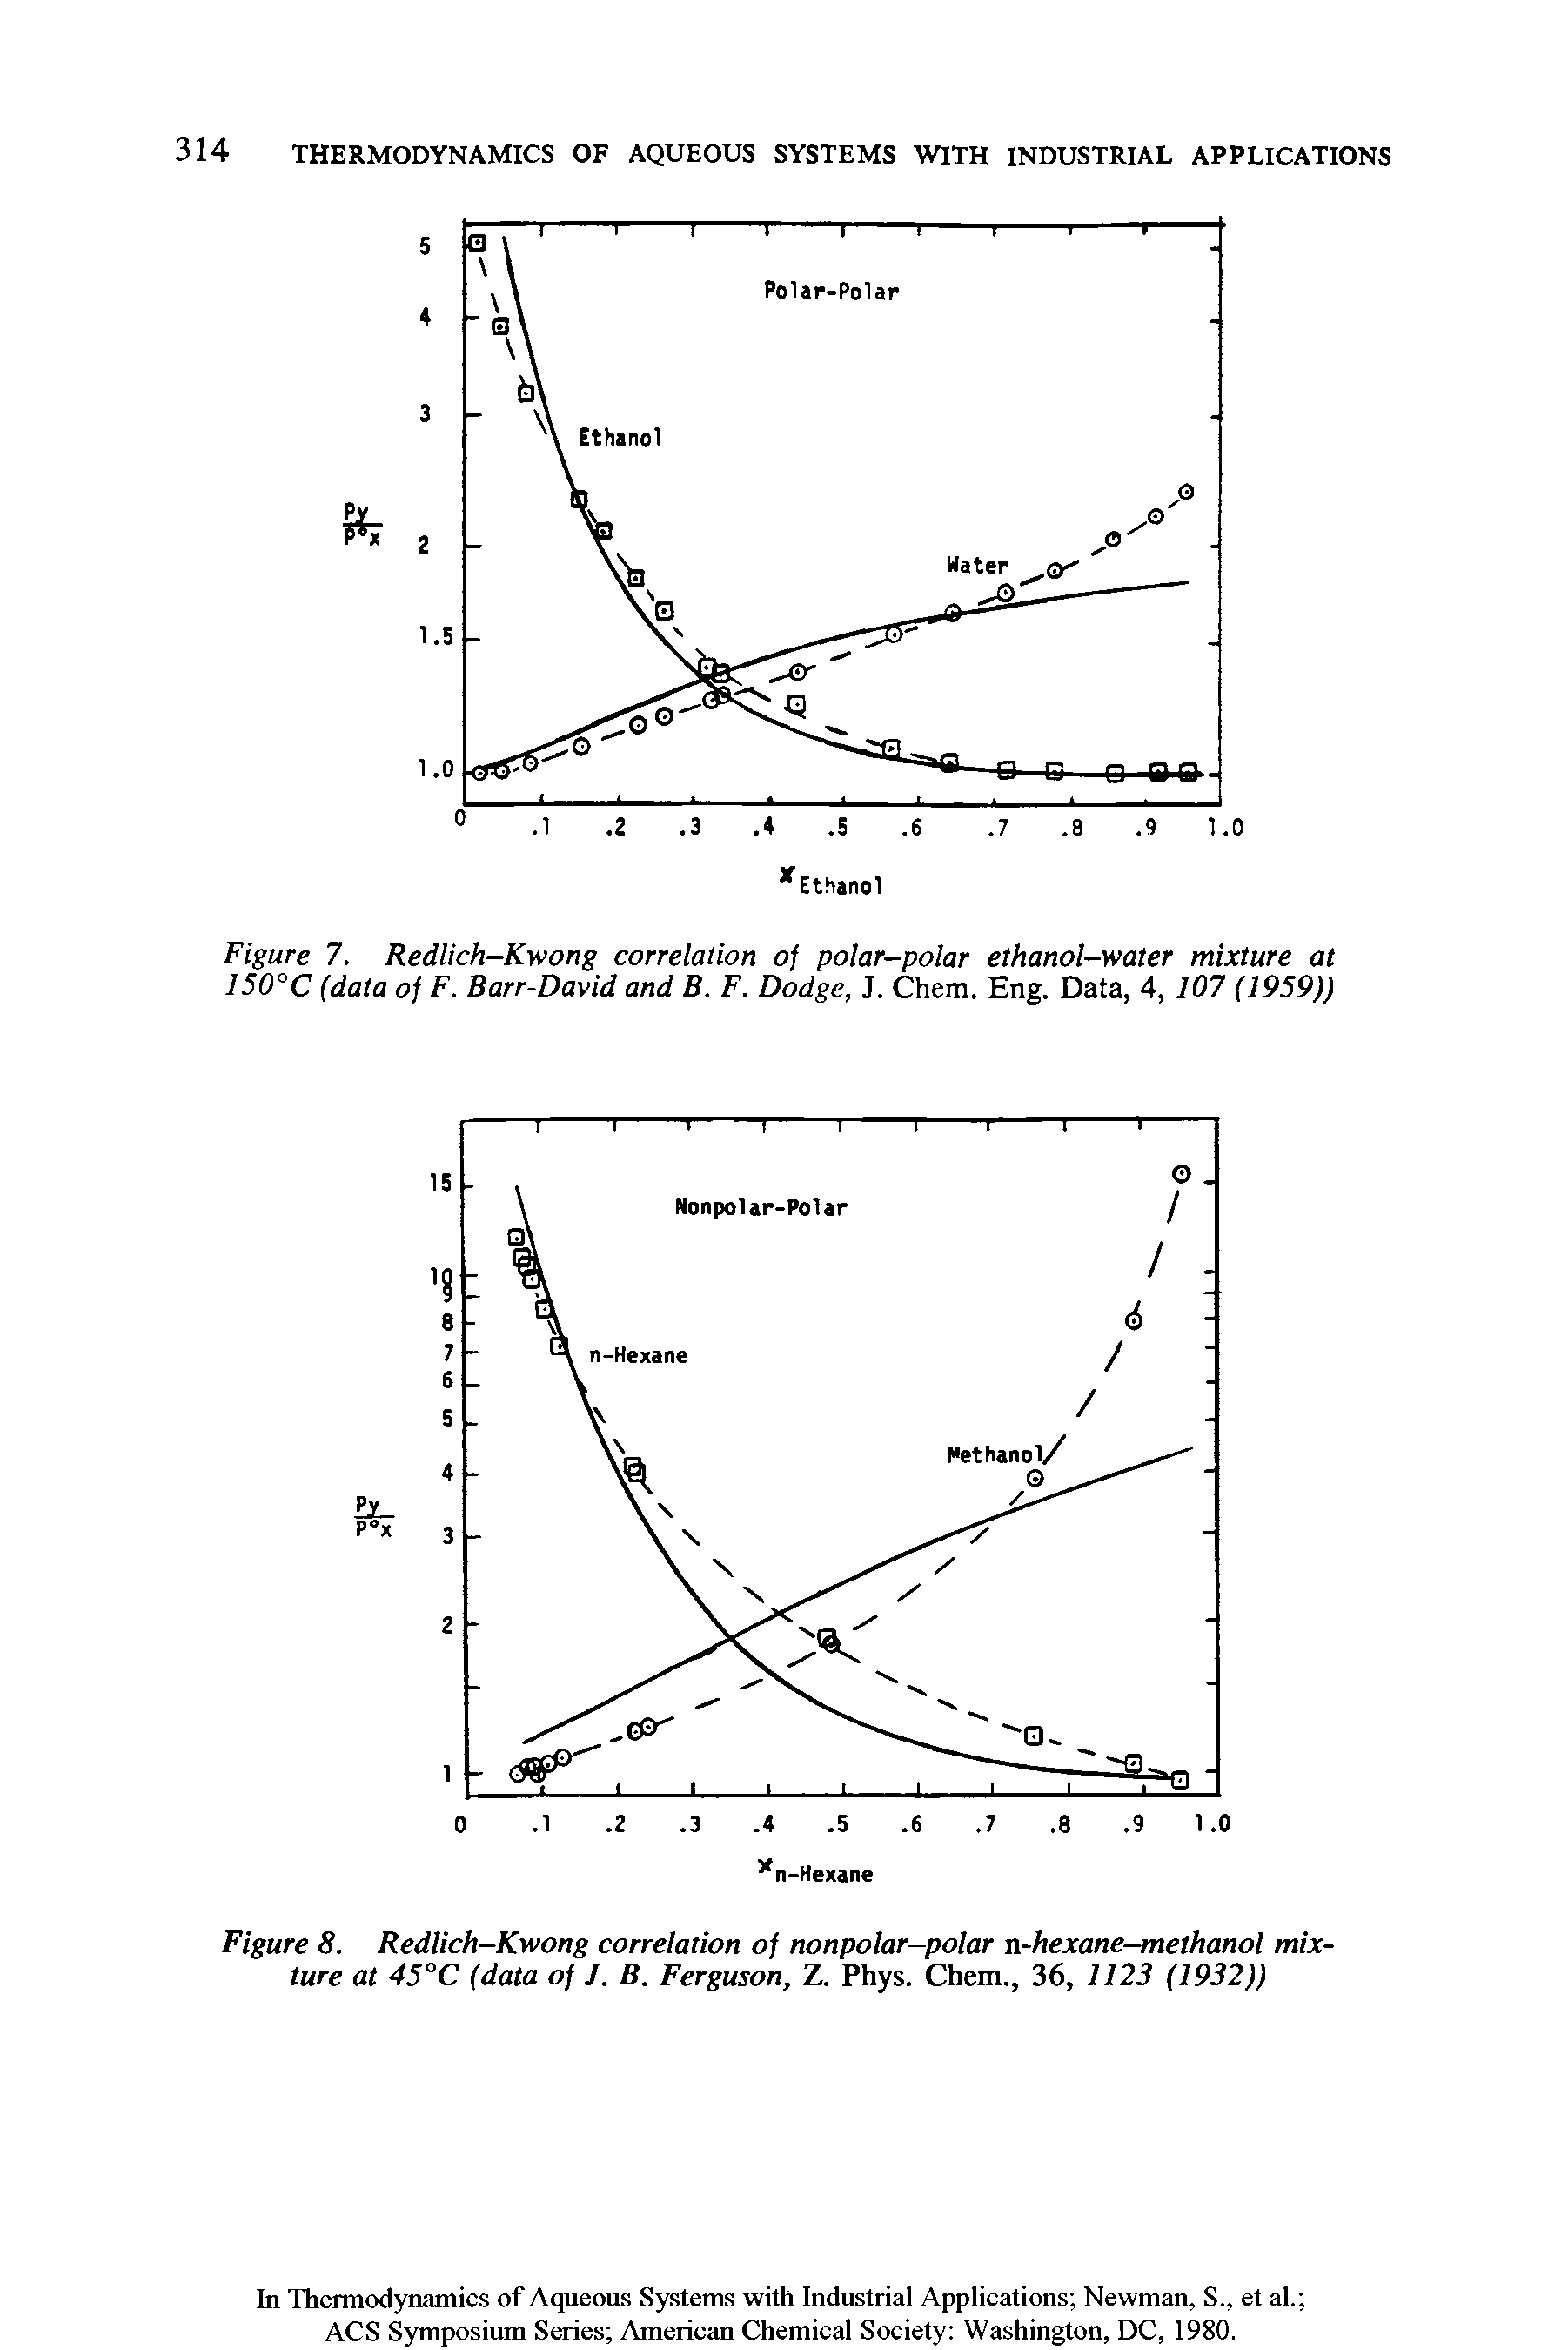 Figure 7. Redlich-Kwong correlation of polar-polar ethanol-water mixture at 150°C (data of F. Barr-David and B. F. Dodge, J. Chem. Eng. Data, 4, 107 (1959))...